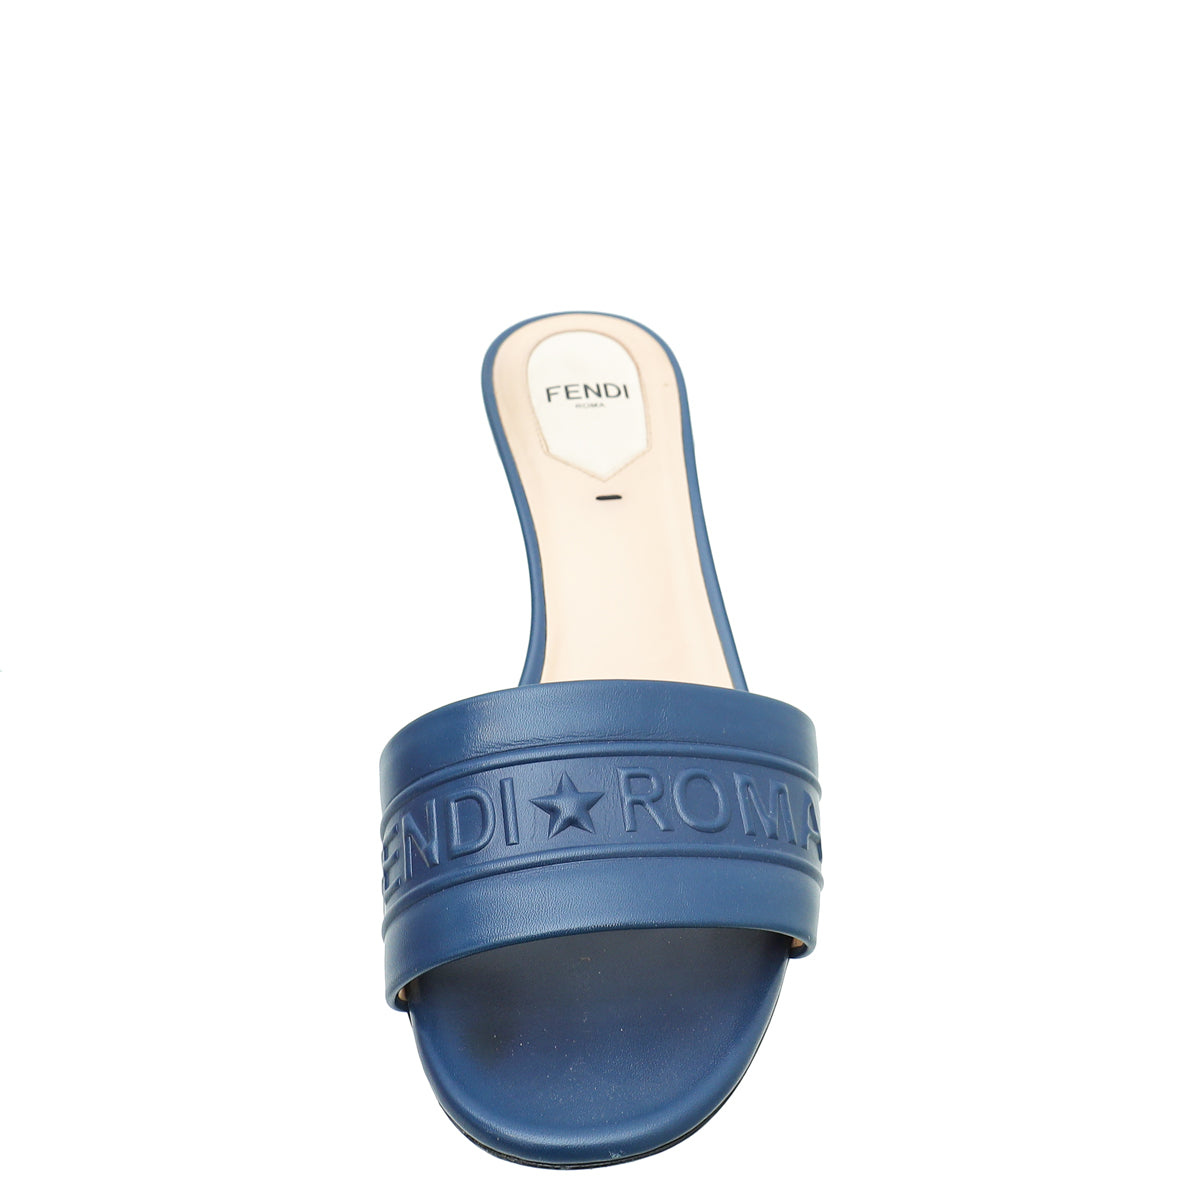 Fendi Blue "Fendi Roma" Slide Sandals 37